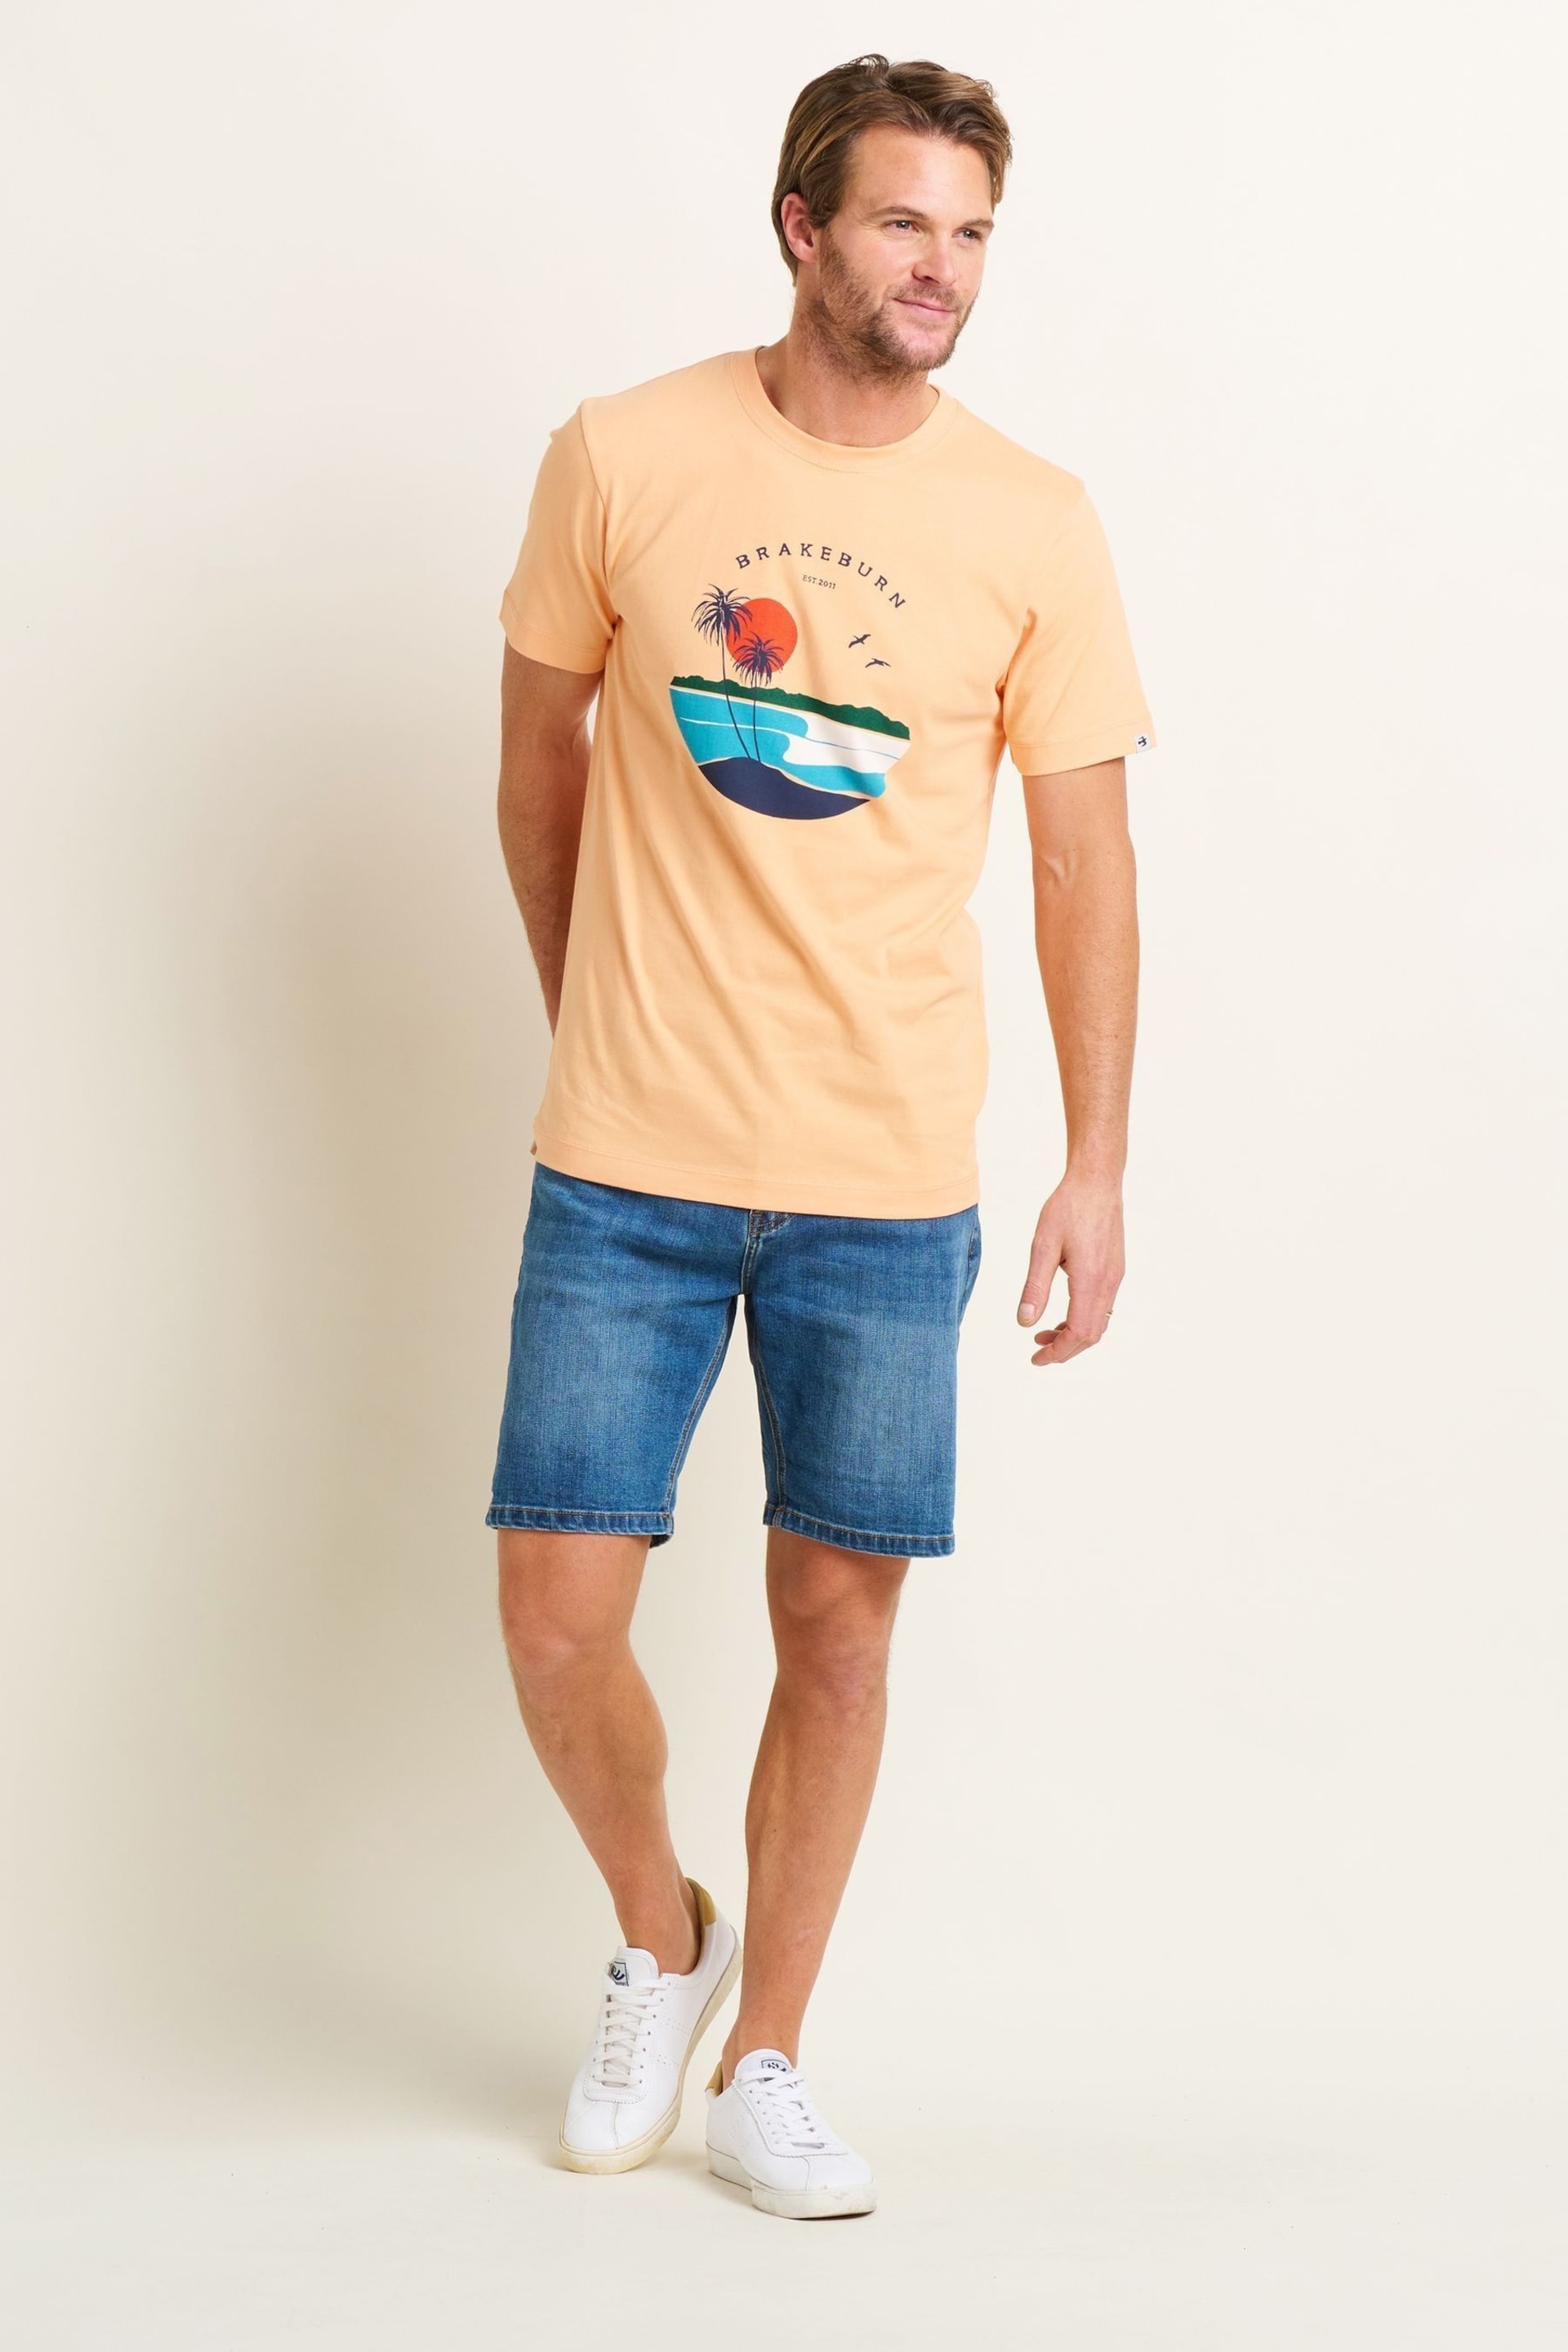 Brakeburn Peach Island T-Shirt - Image 4 of 6